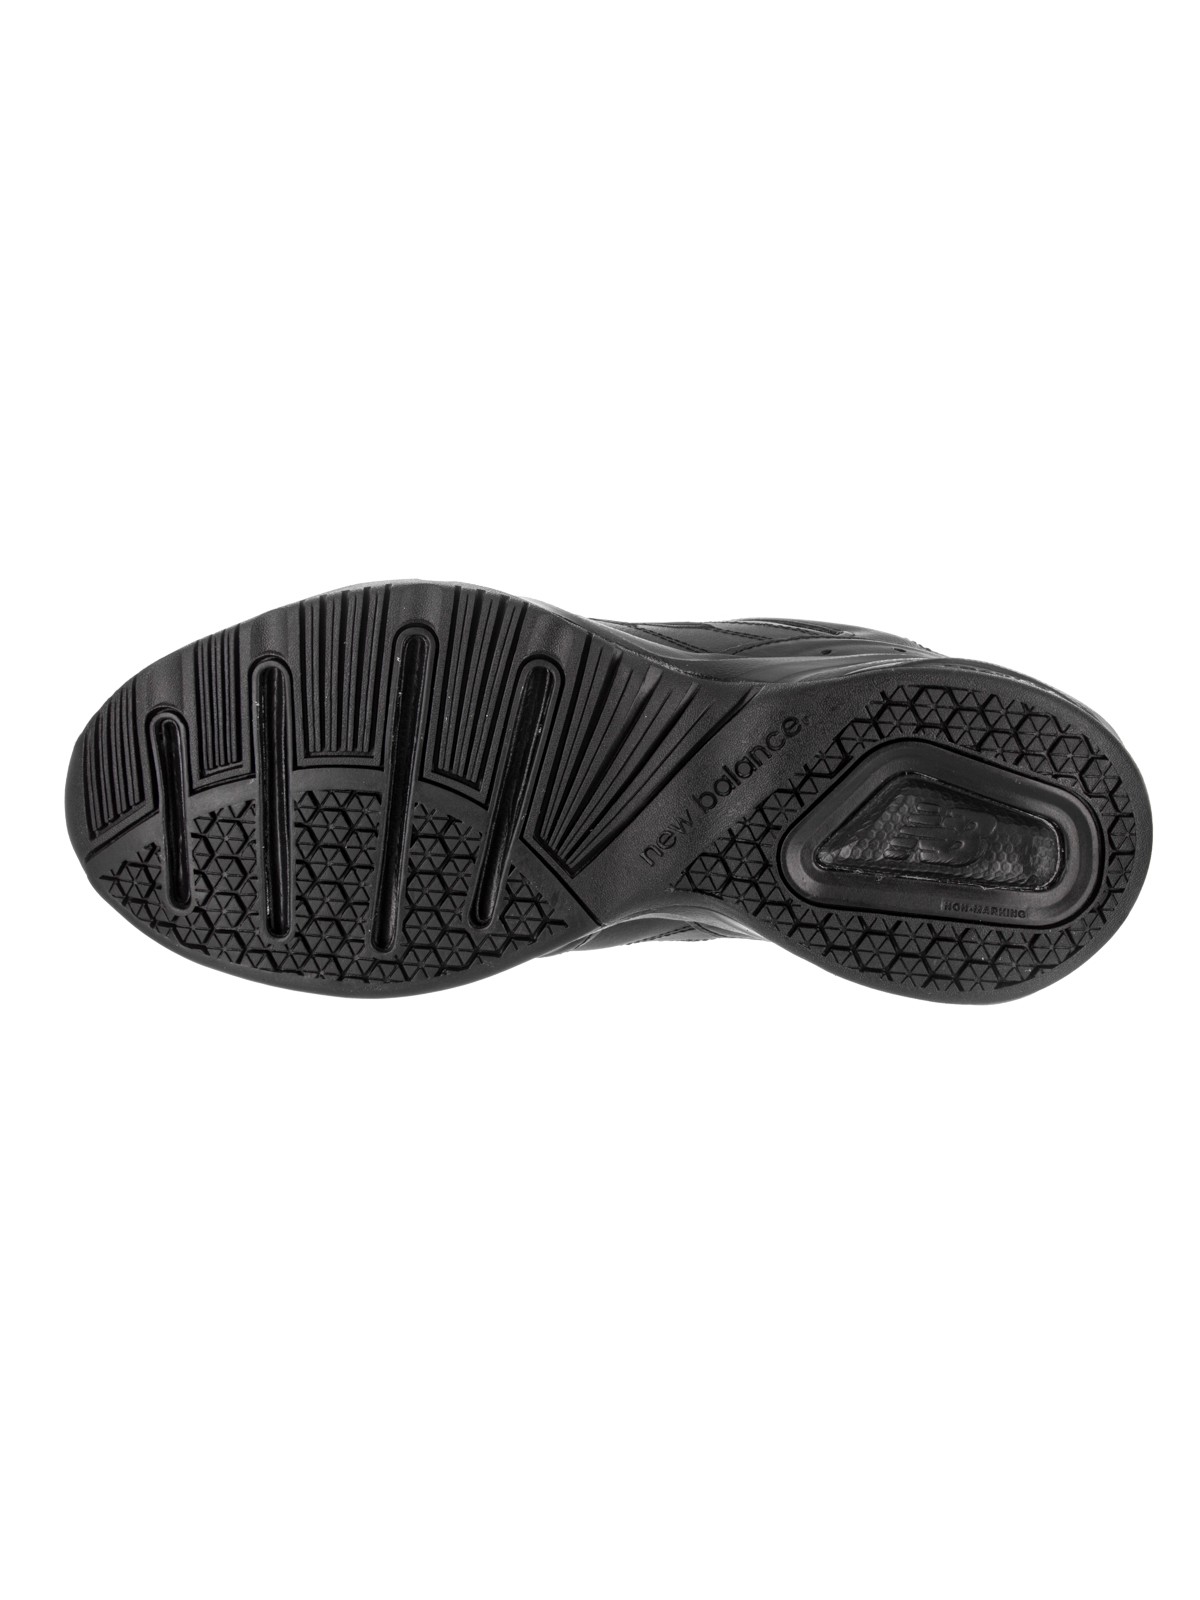 new balance men's mx624v2 casual comfort training shoe, black, 10.5 4e us - image 5 of 5